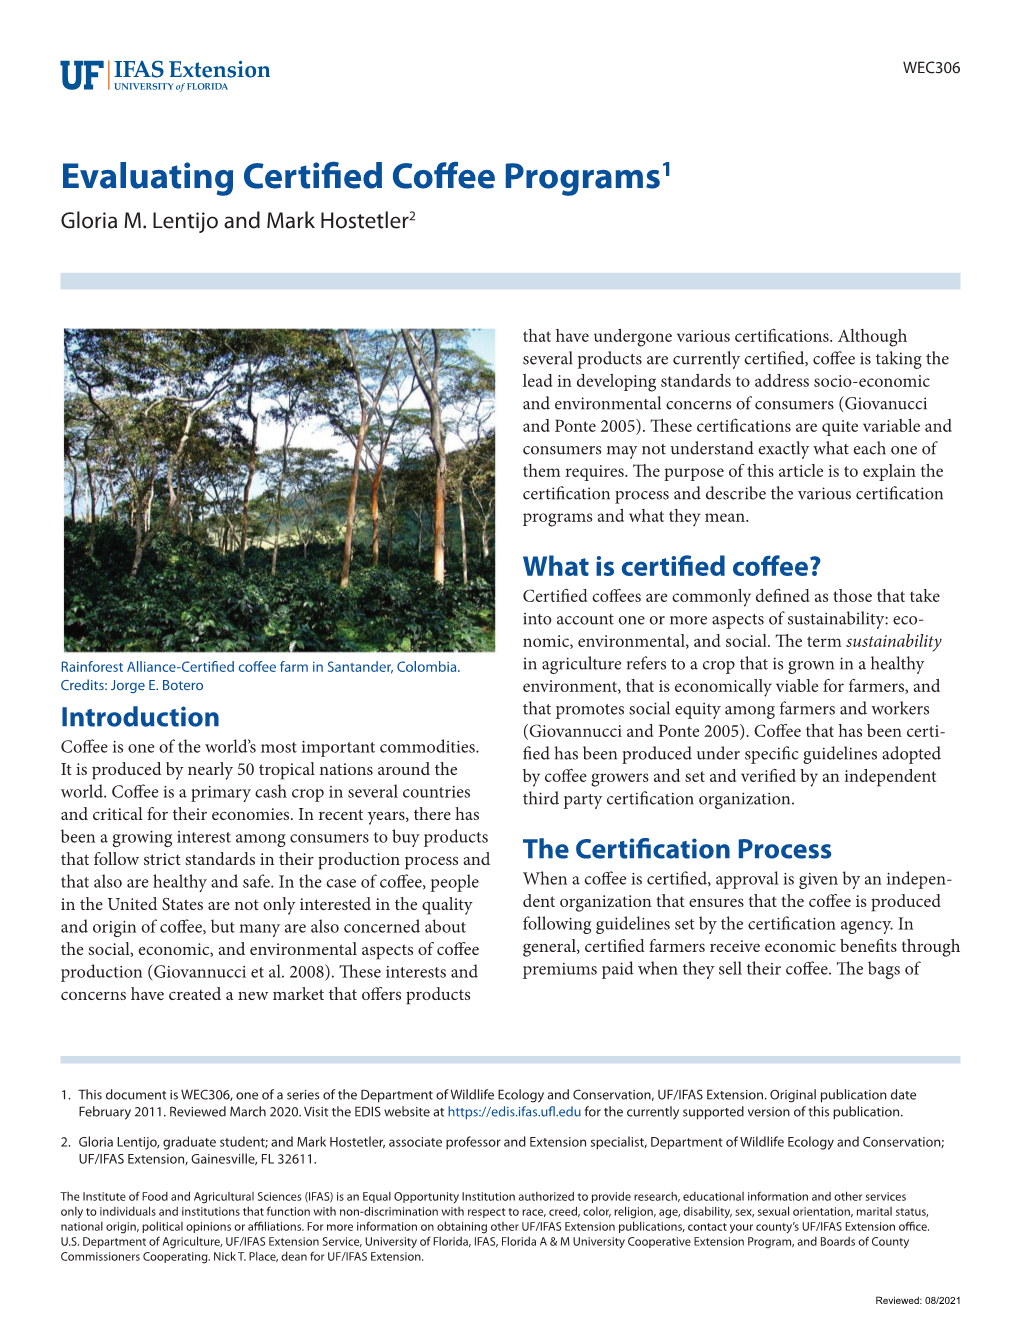 Evaluating Certified Coffee Programs1 Gloria M